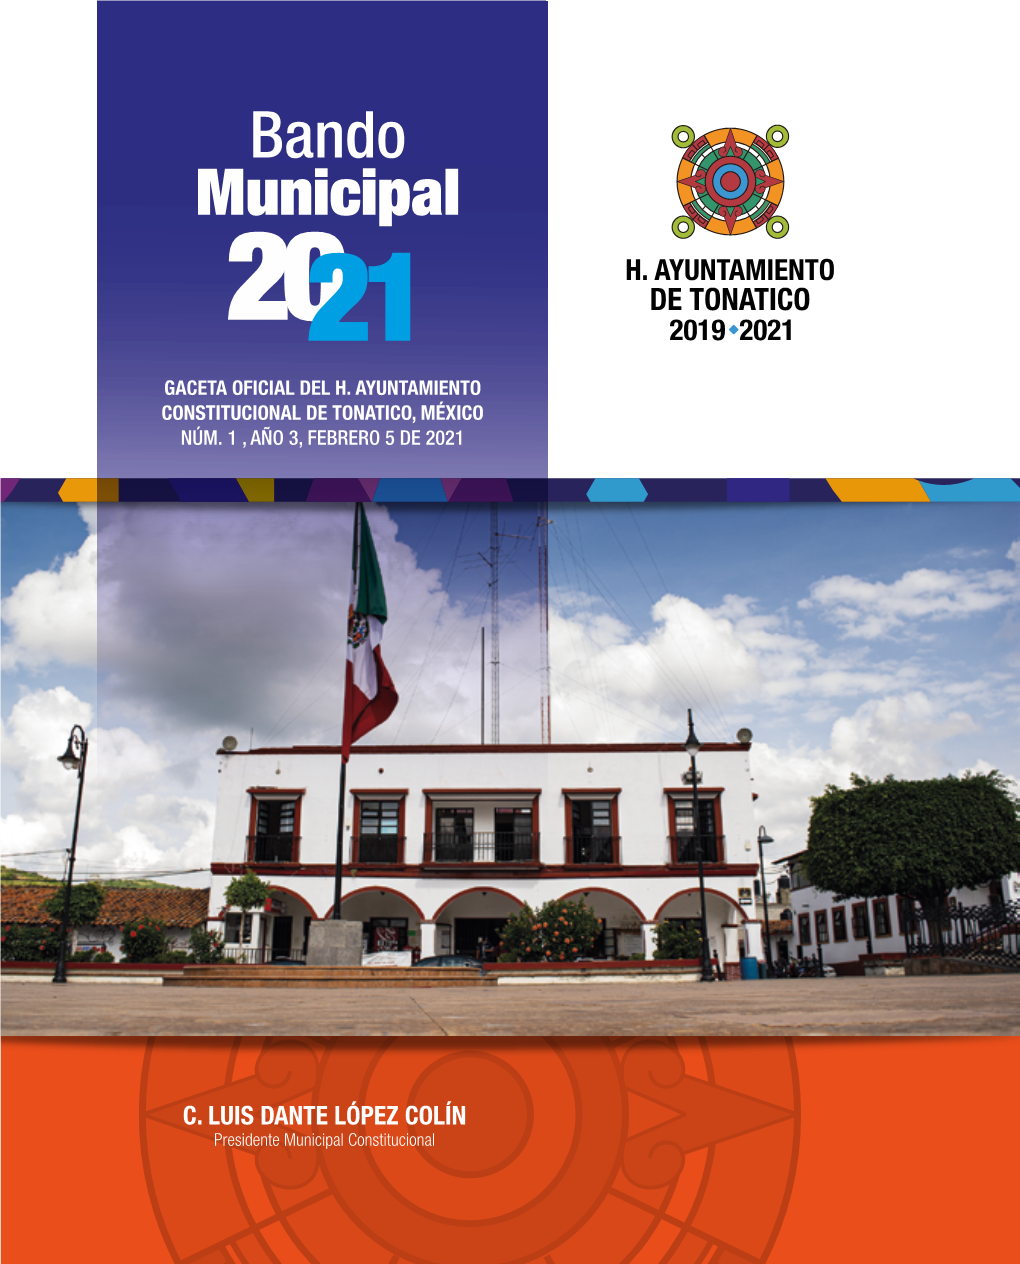 Bando Municipal 2021 GACETA OFICIAL DEL H